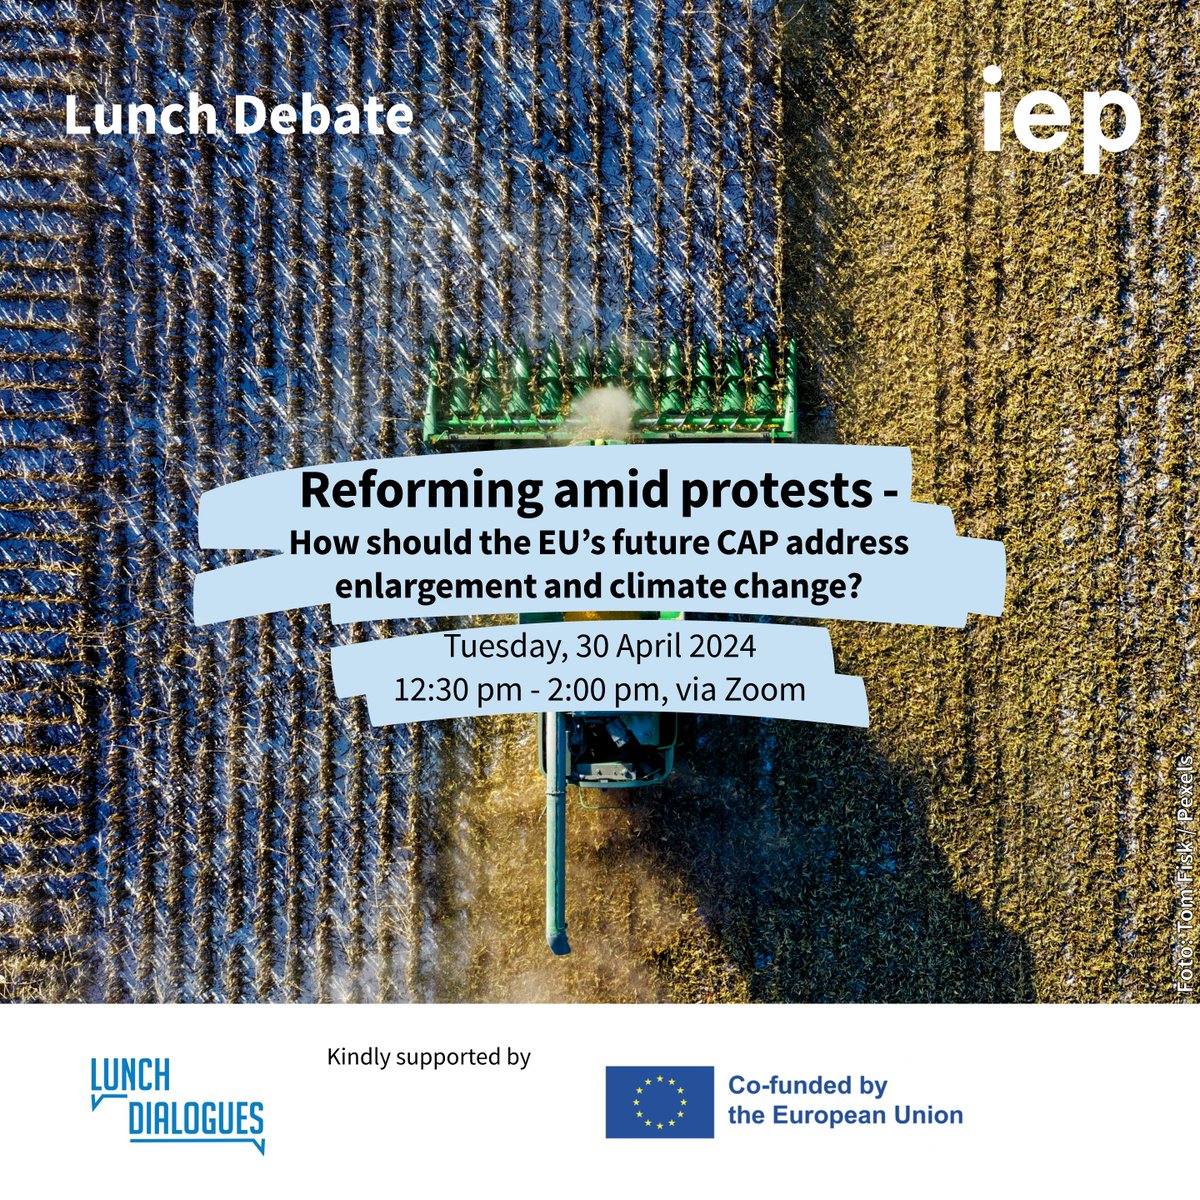 📣How should the #EU’s future #CAP address enlargement & climate change?

🗓️Join our #LunchDebate on 30 April 2024, 12:30 - 2 pm, via Zoom
🎙️Speakers: Gijs Schilthuis, Dr @BettinaRudloff, @PierreMarieA Aubert, Tatiana Nemcová

More info & registration
👉tinyurl.com/2e8syjzp
🧵